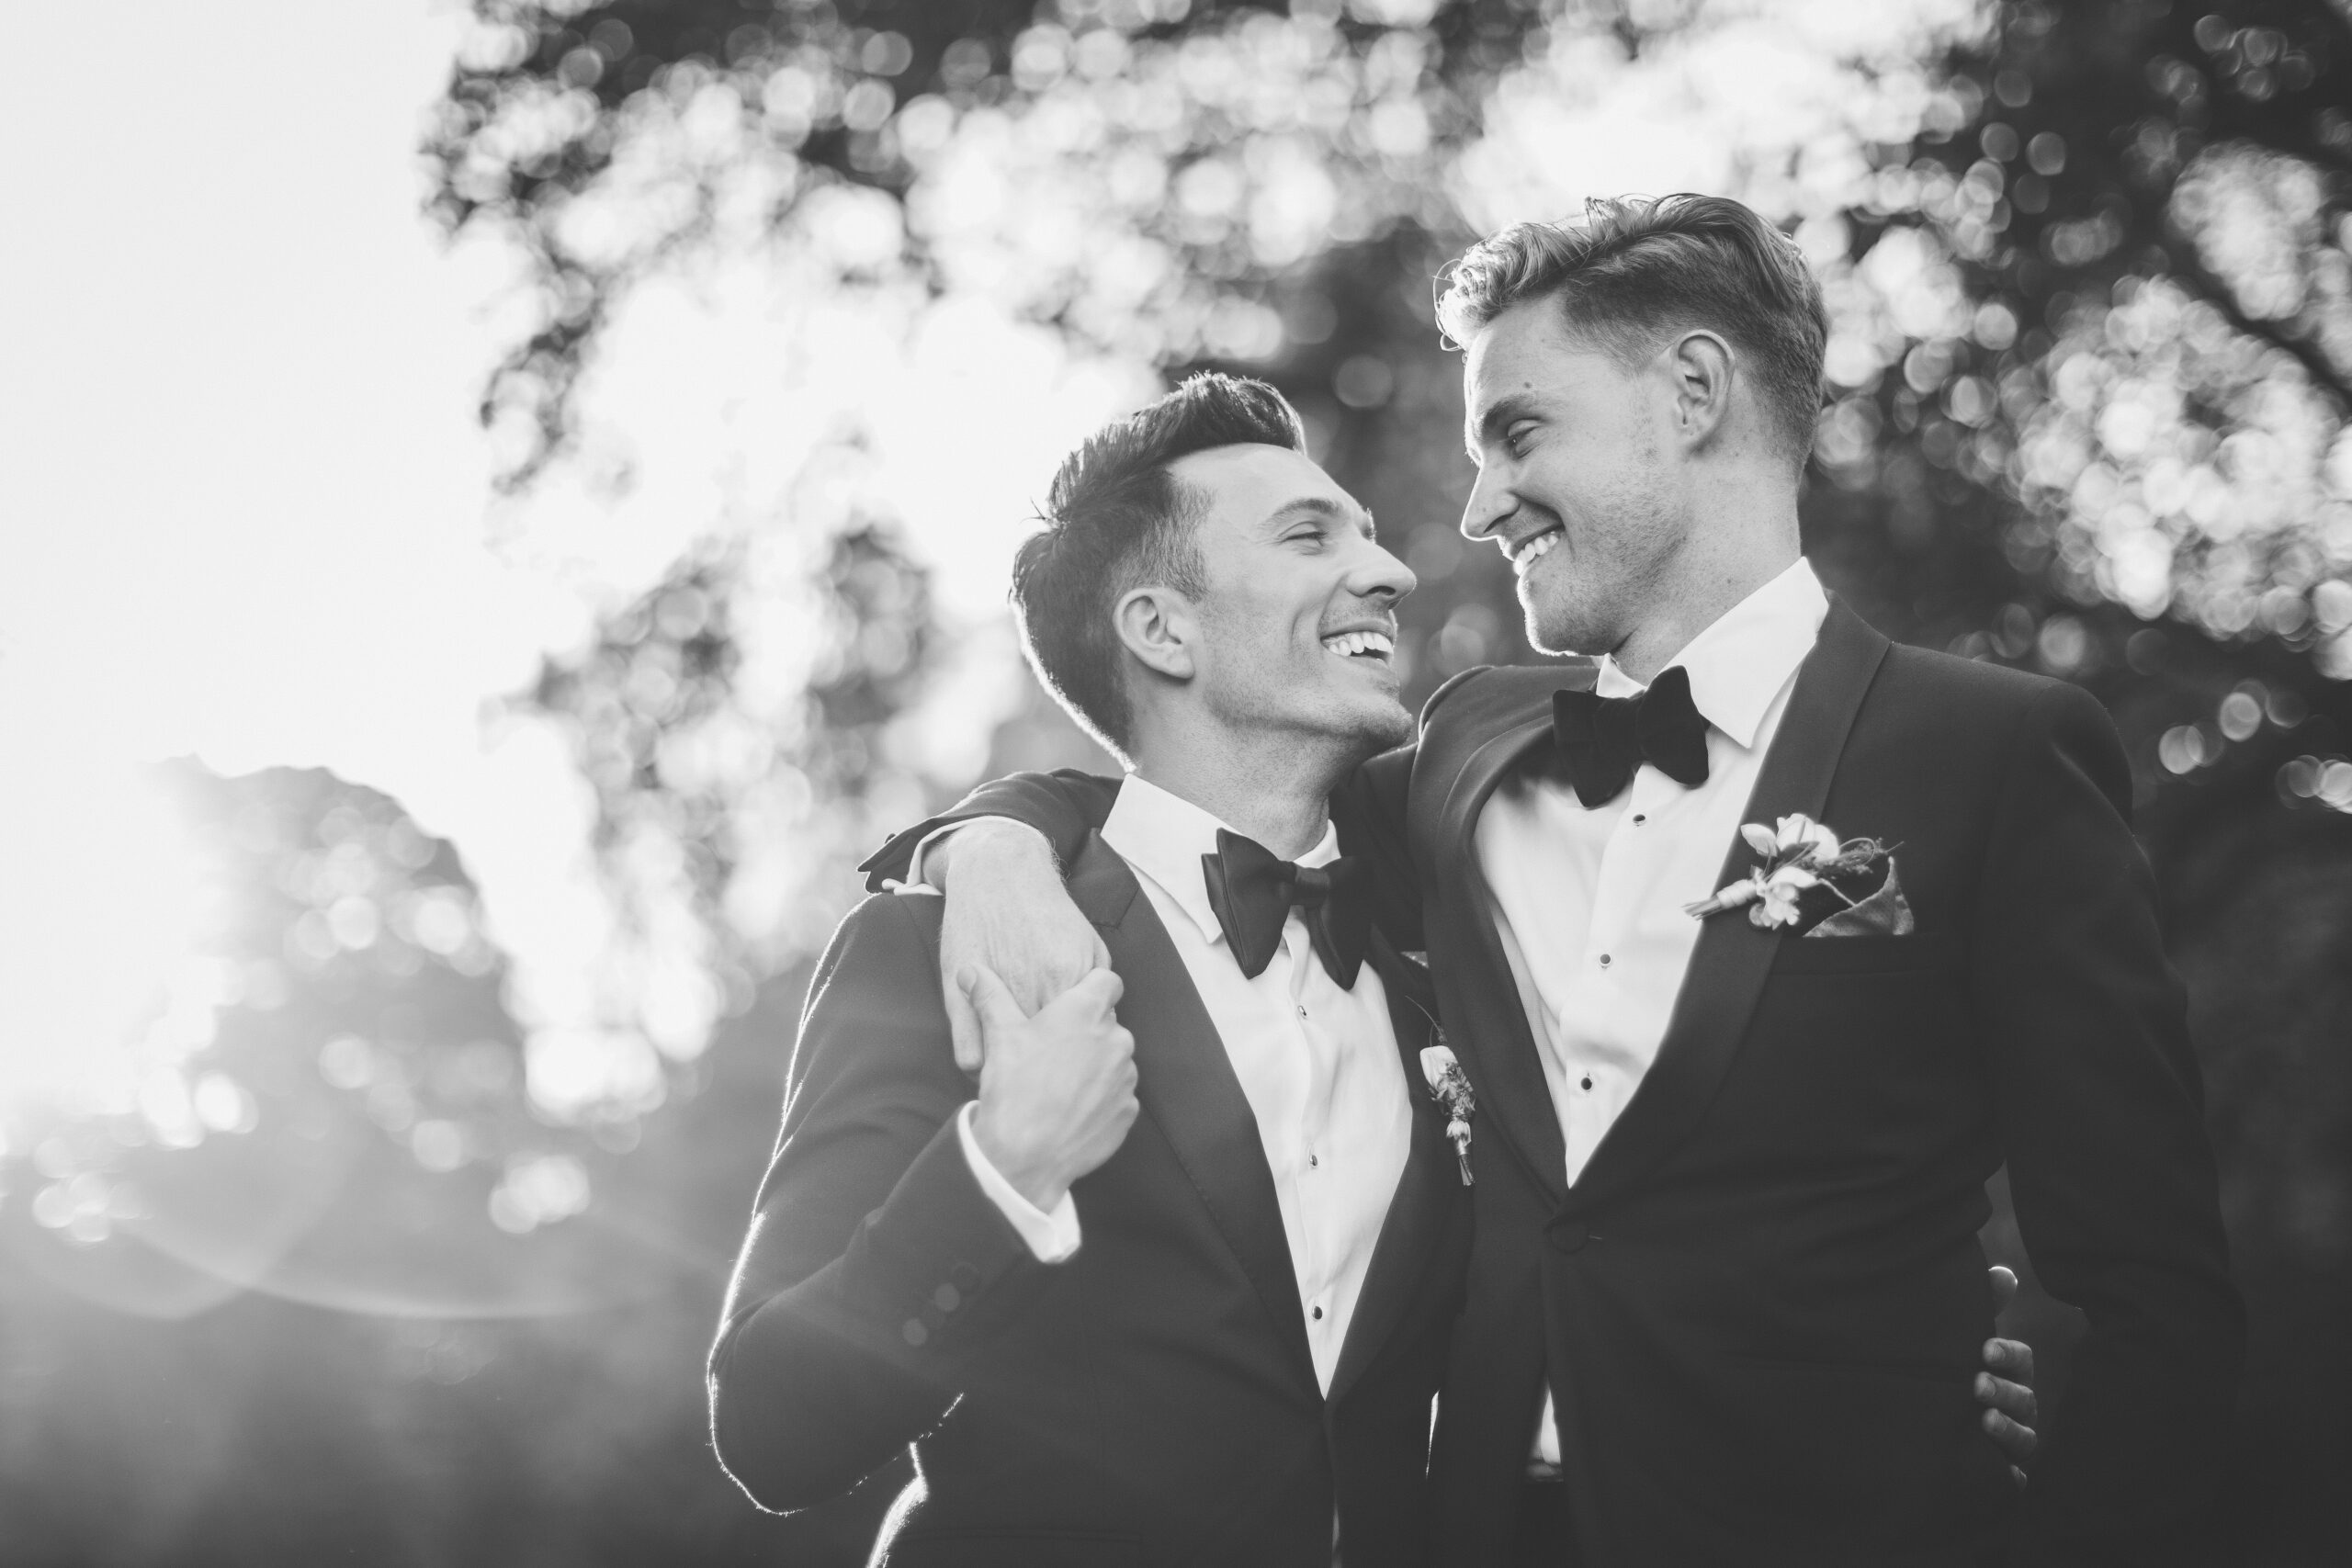 Planning a Same-Sex Wedding